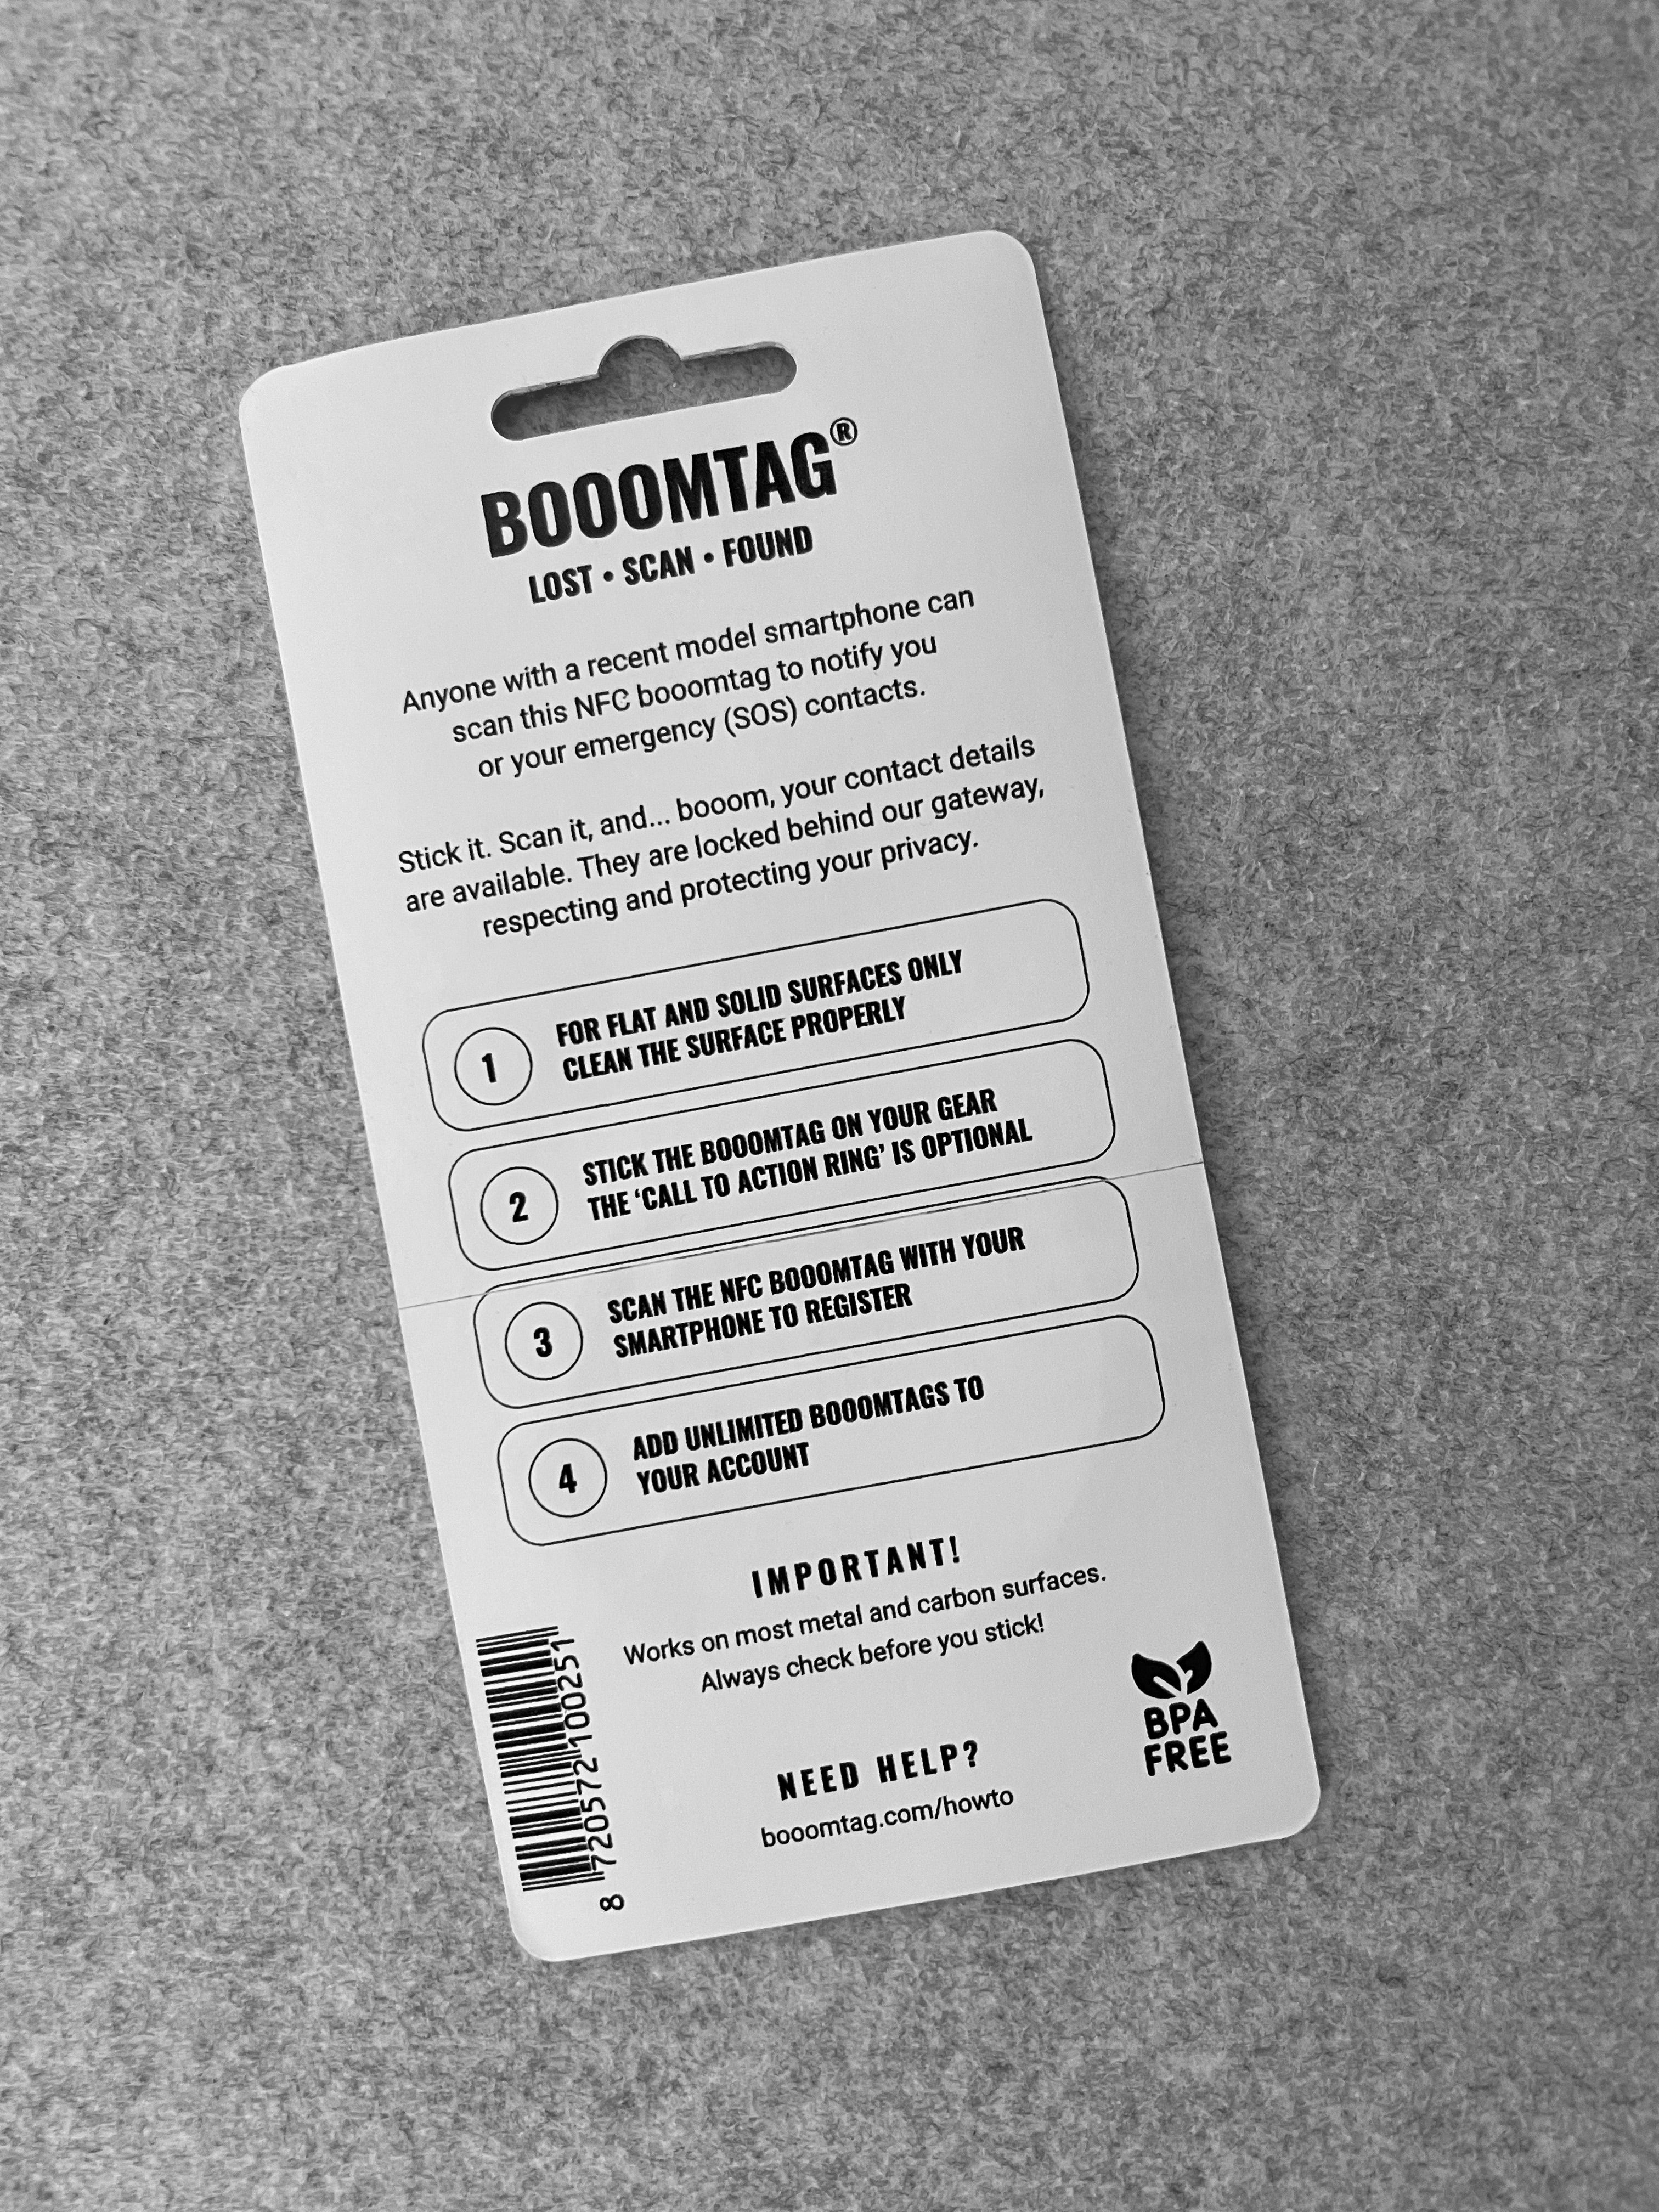 Booomtag® NFC Carbon / Metal 